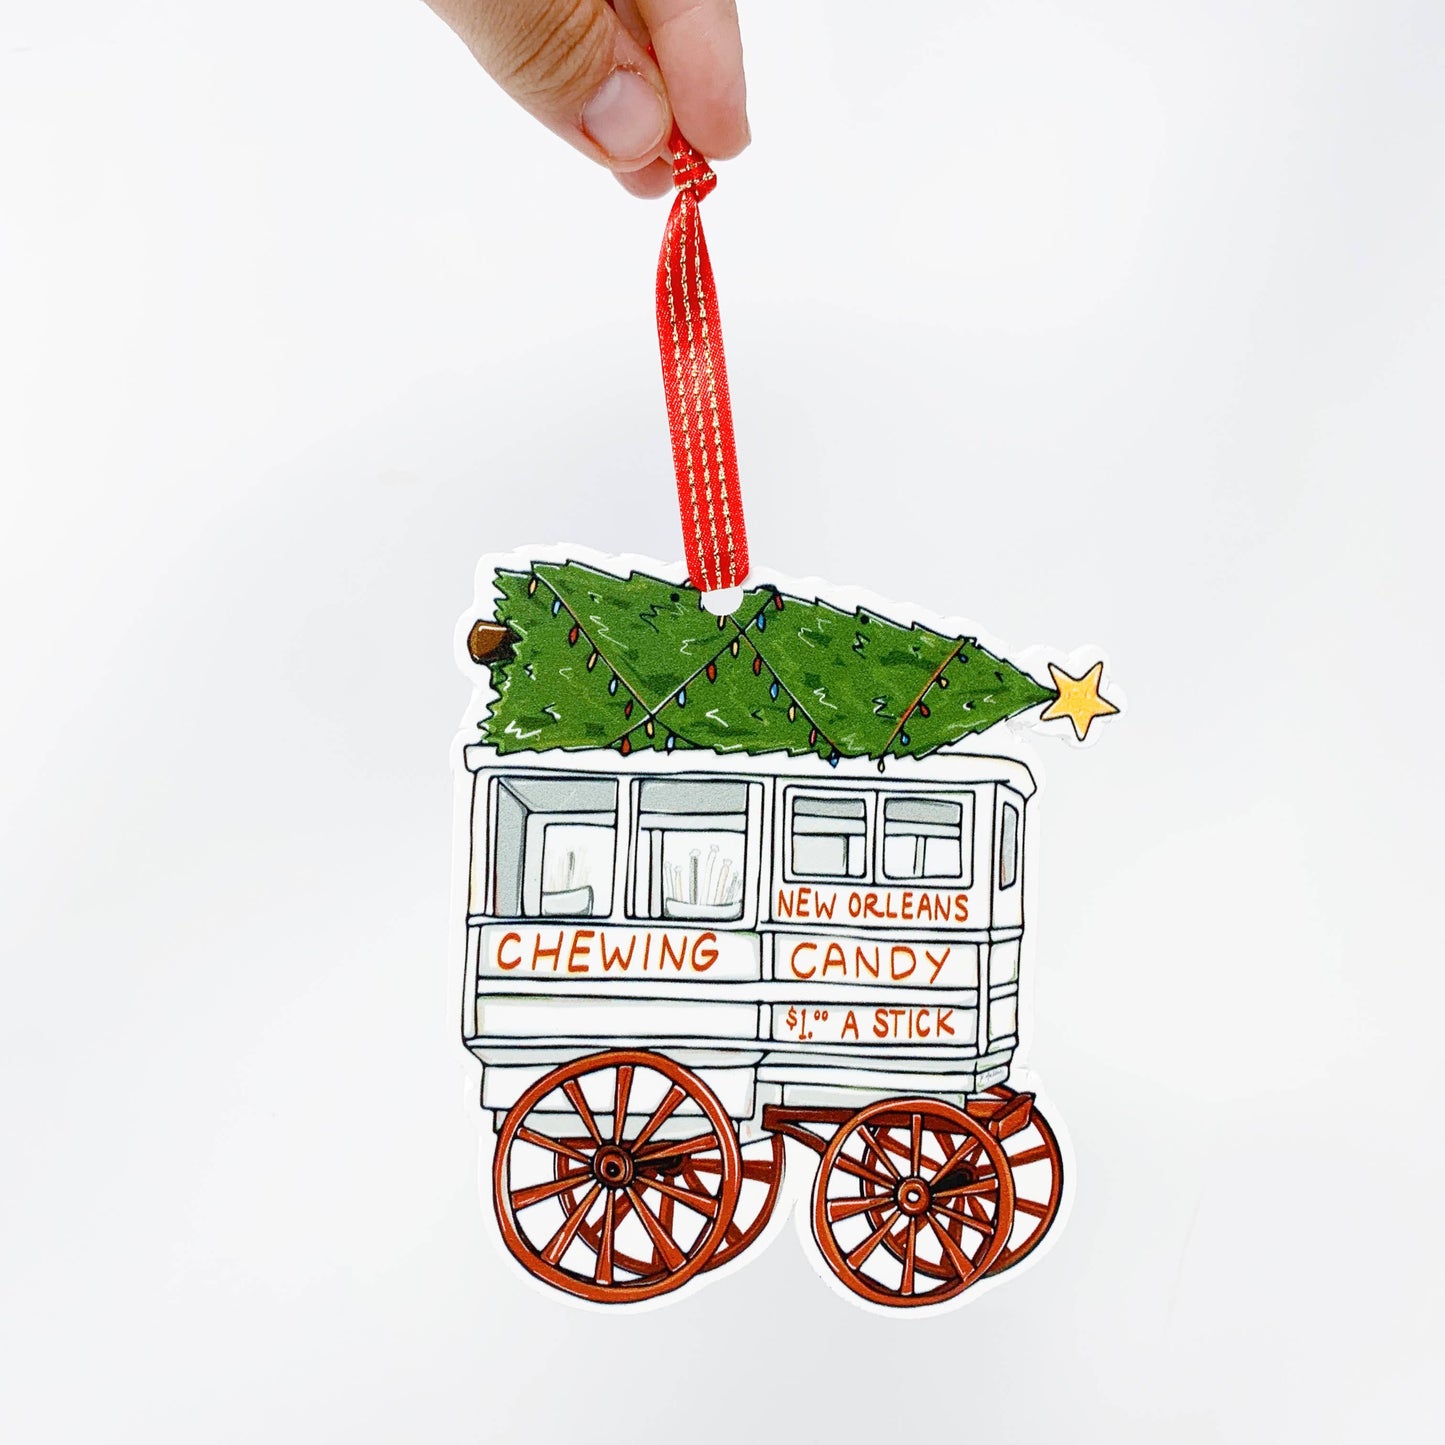 Roman Candy Cart Ornament